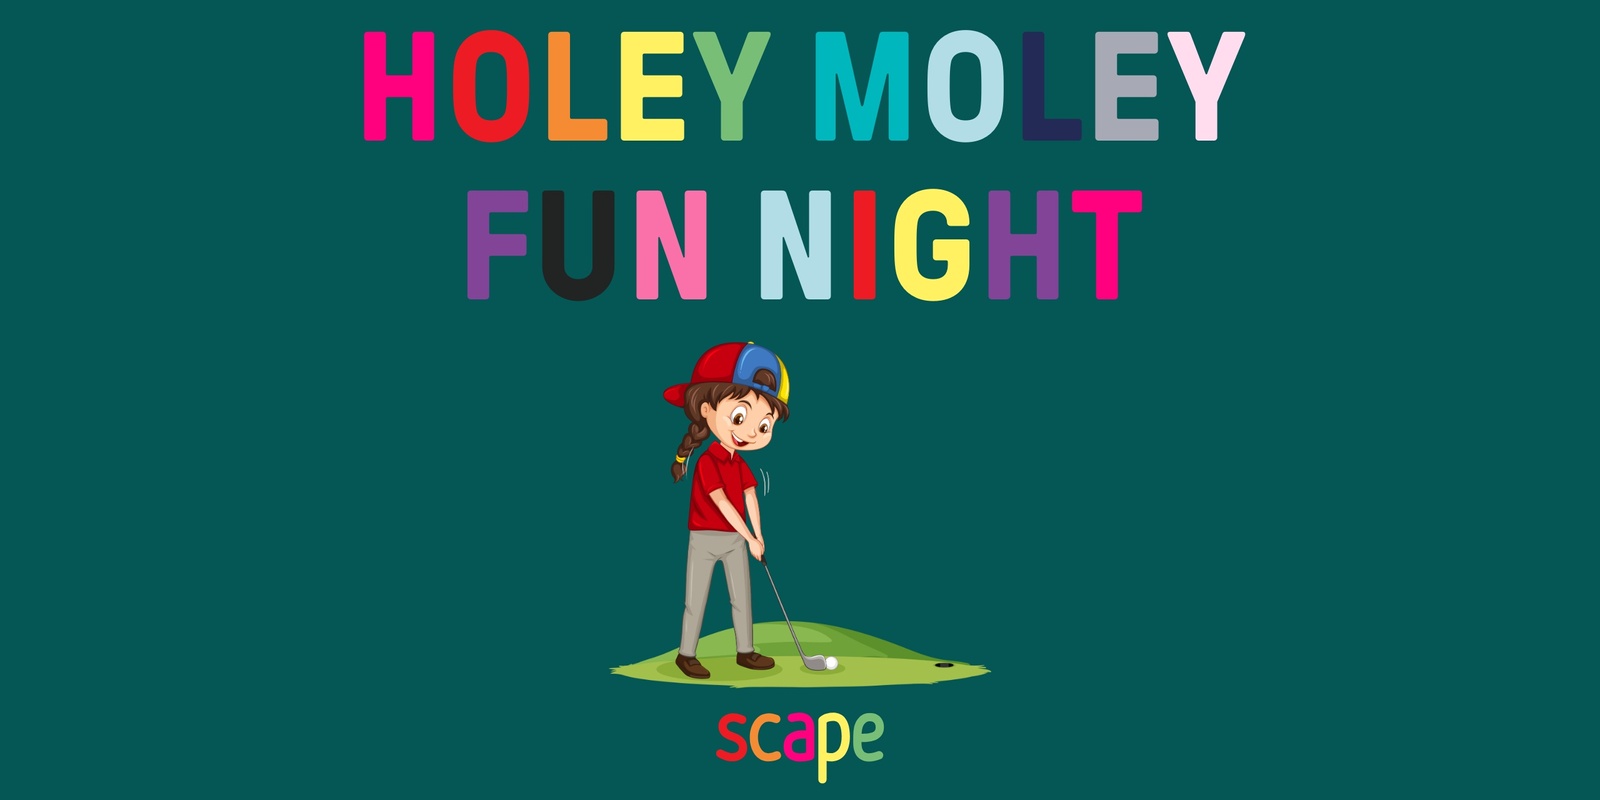 Banner image for Kingsford: Holey Moley Fun Night